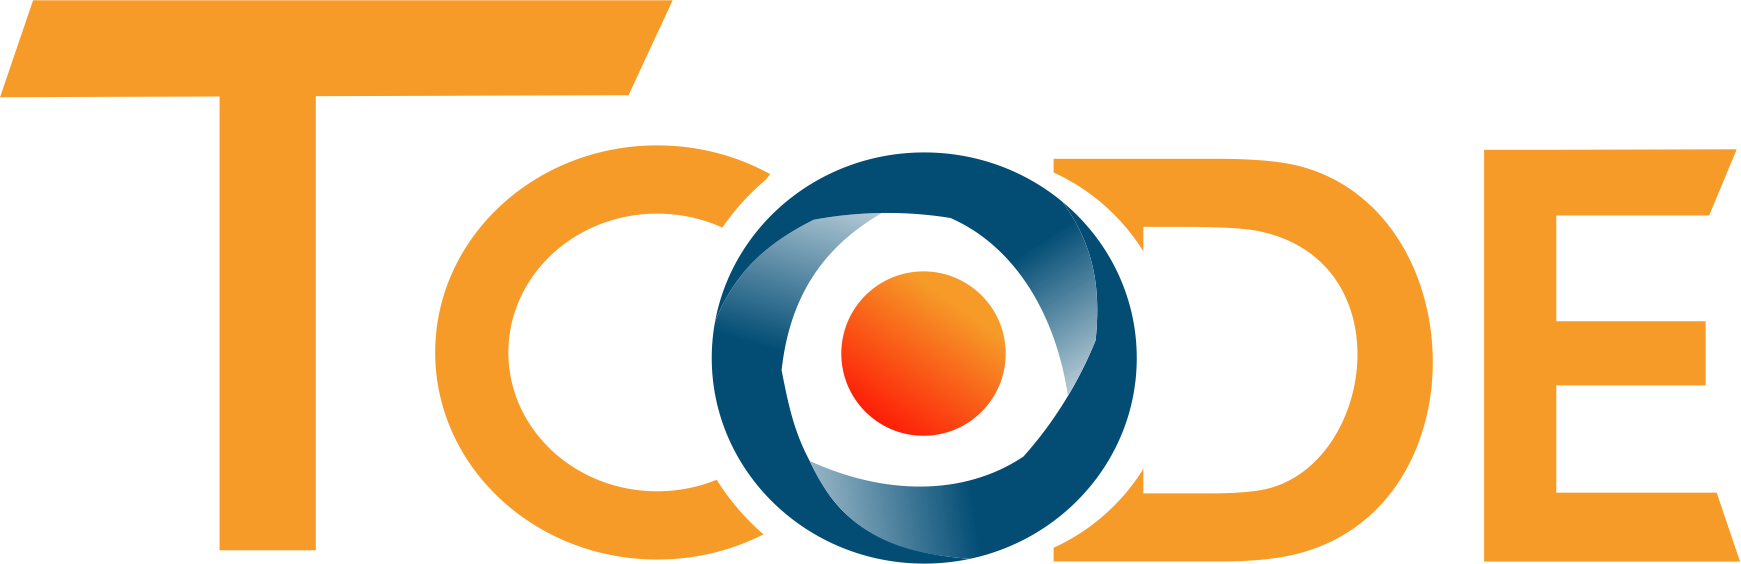 T CODE Logo